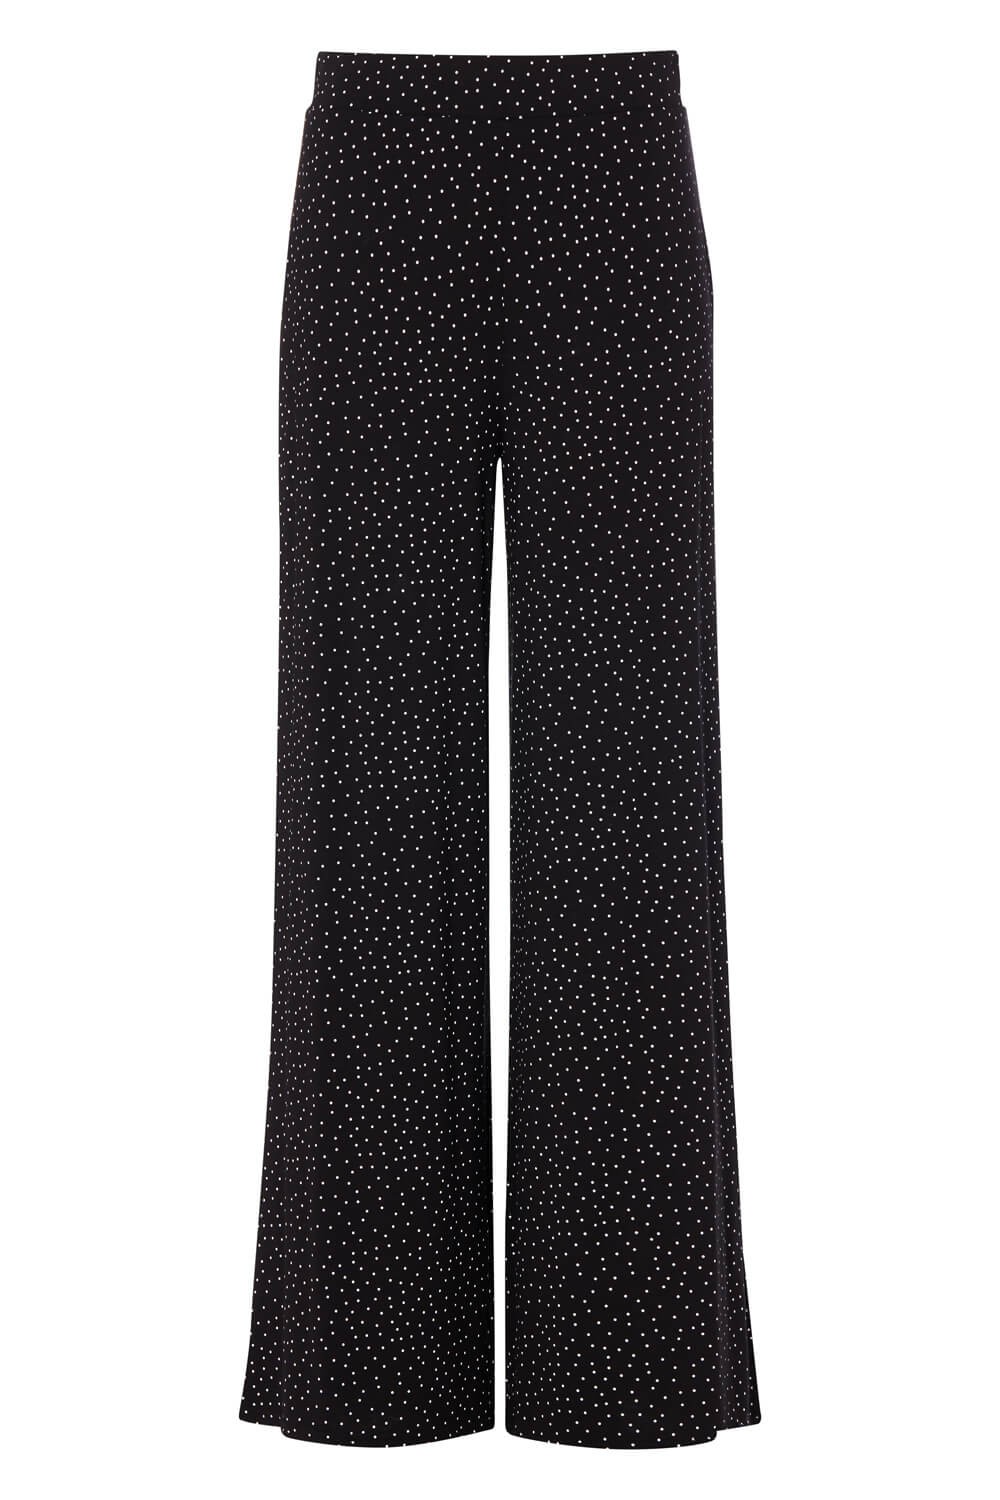 Black Spot Print Wide Leg Trousers, Image 4 of 4